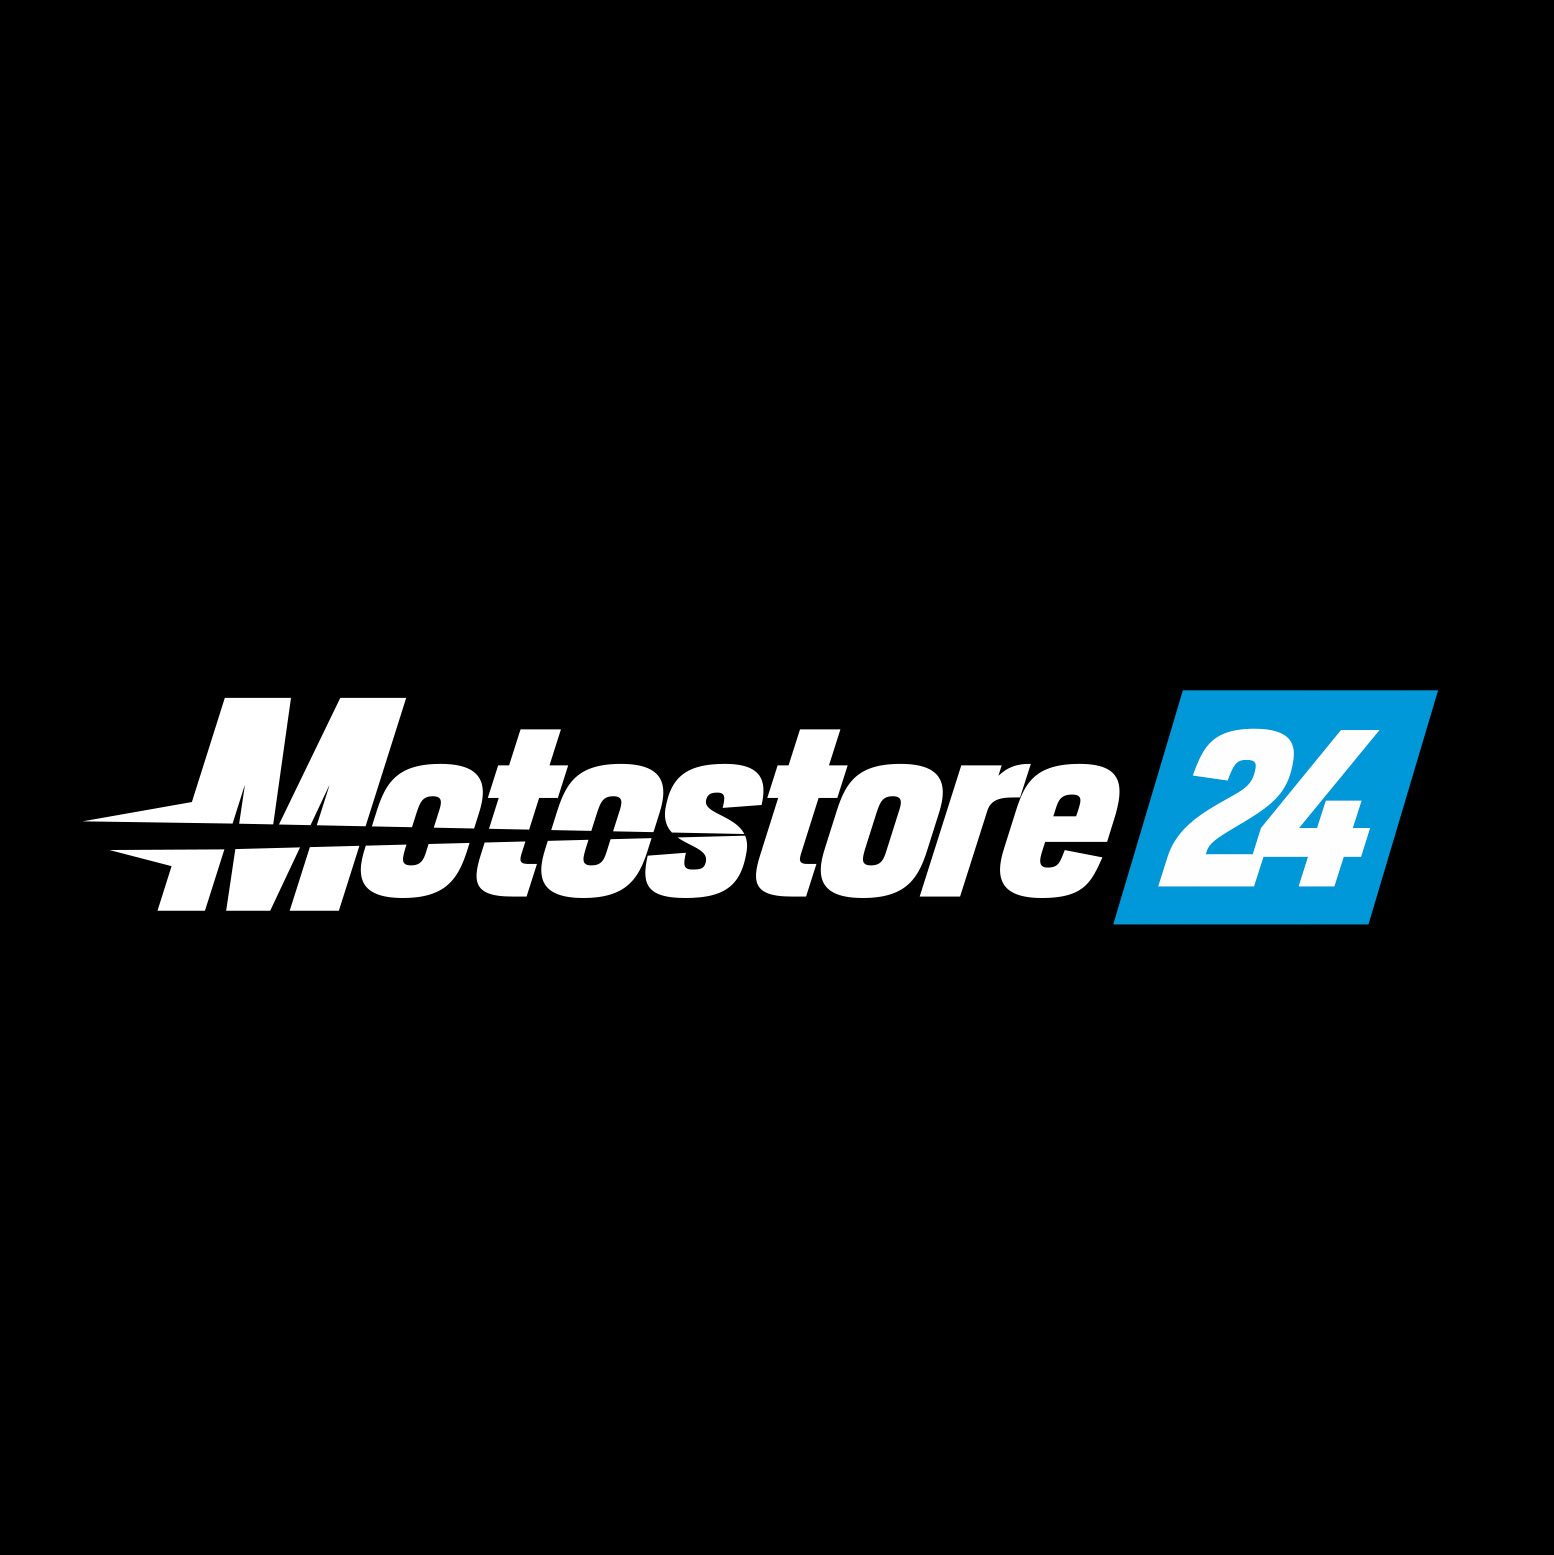 Motostore 24 logo Therwiz Design